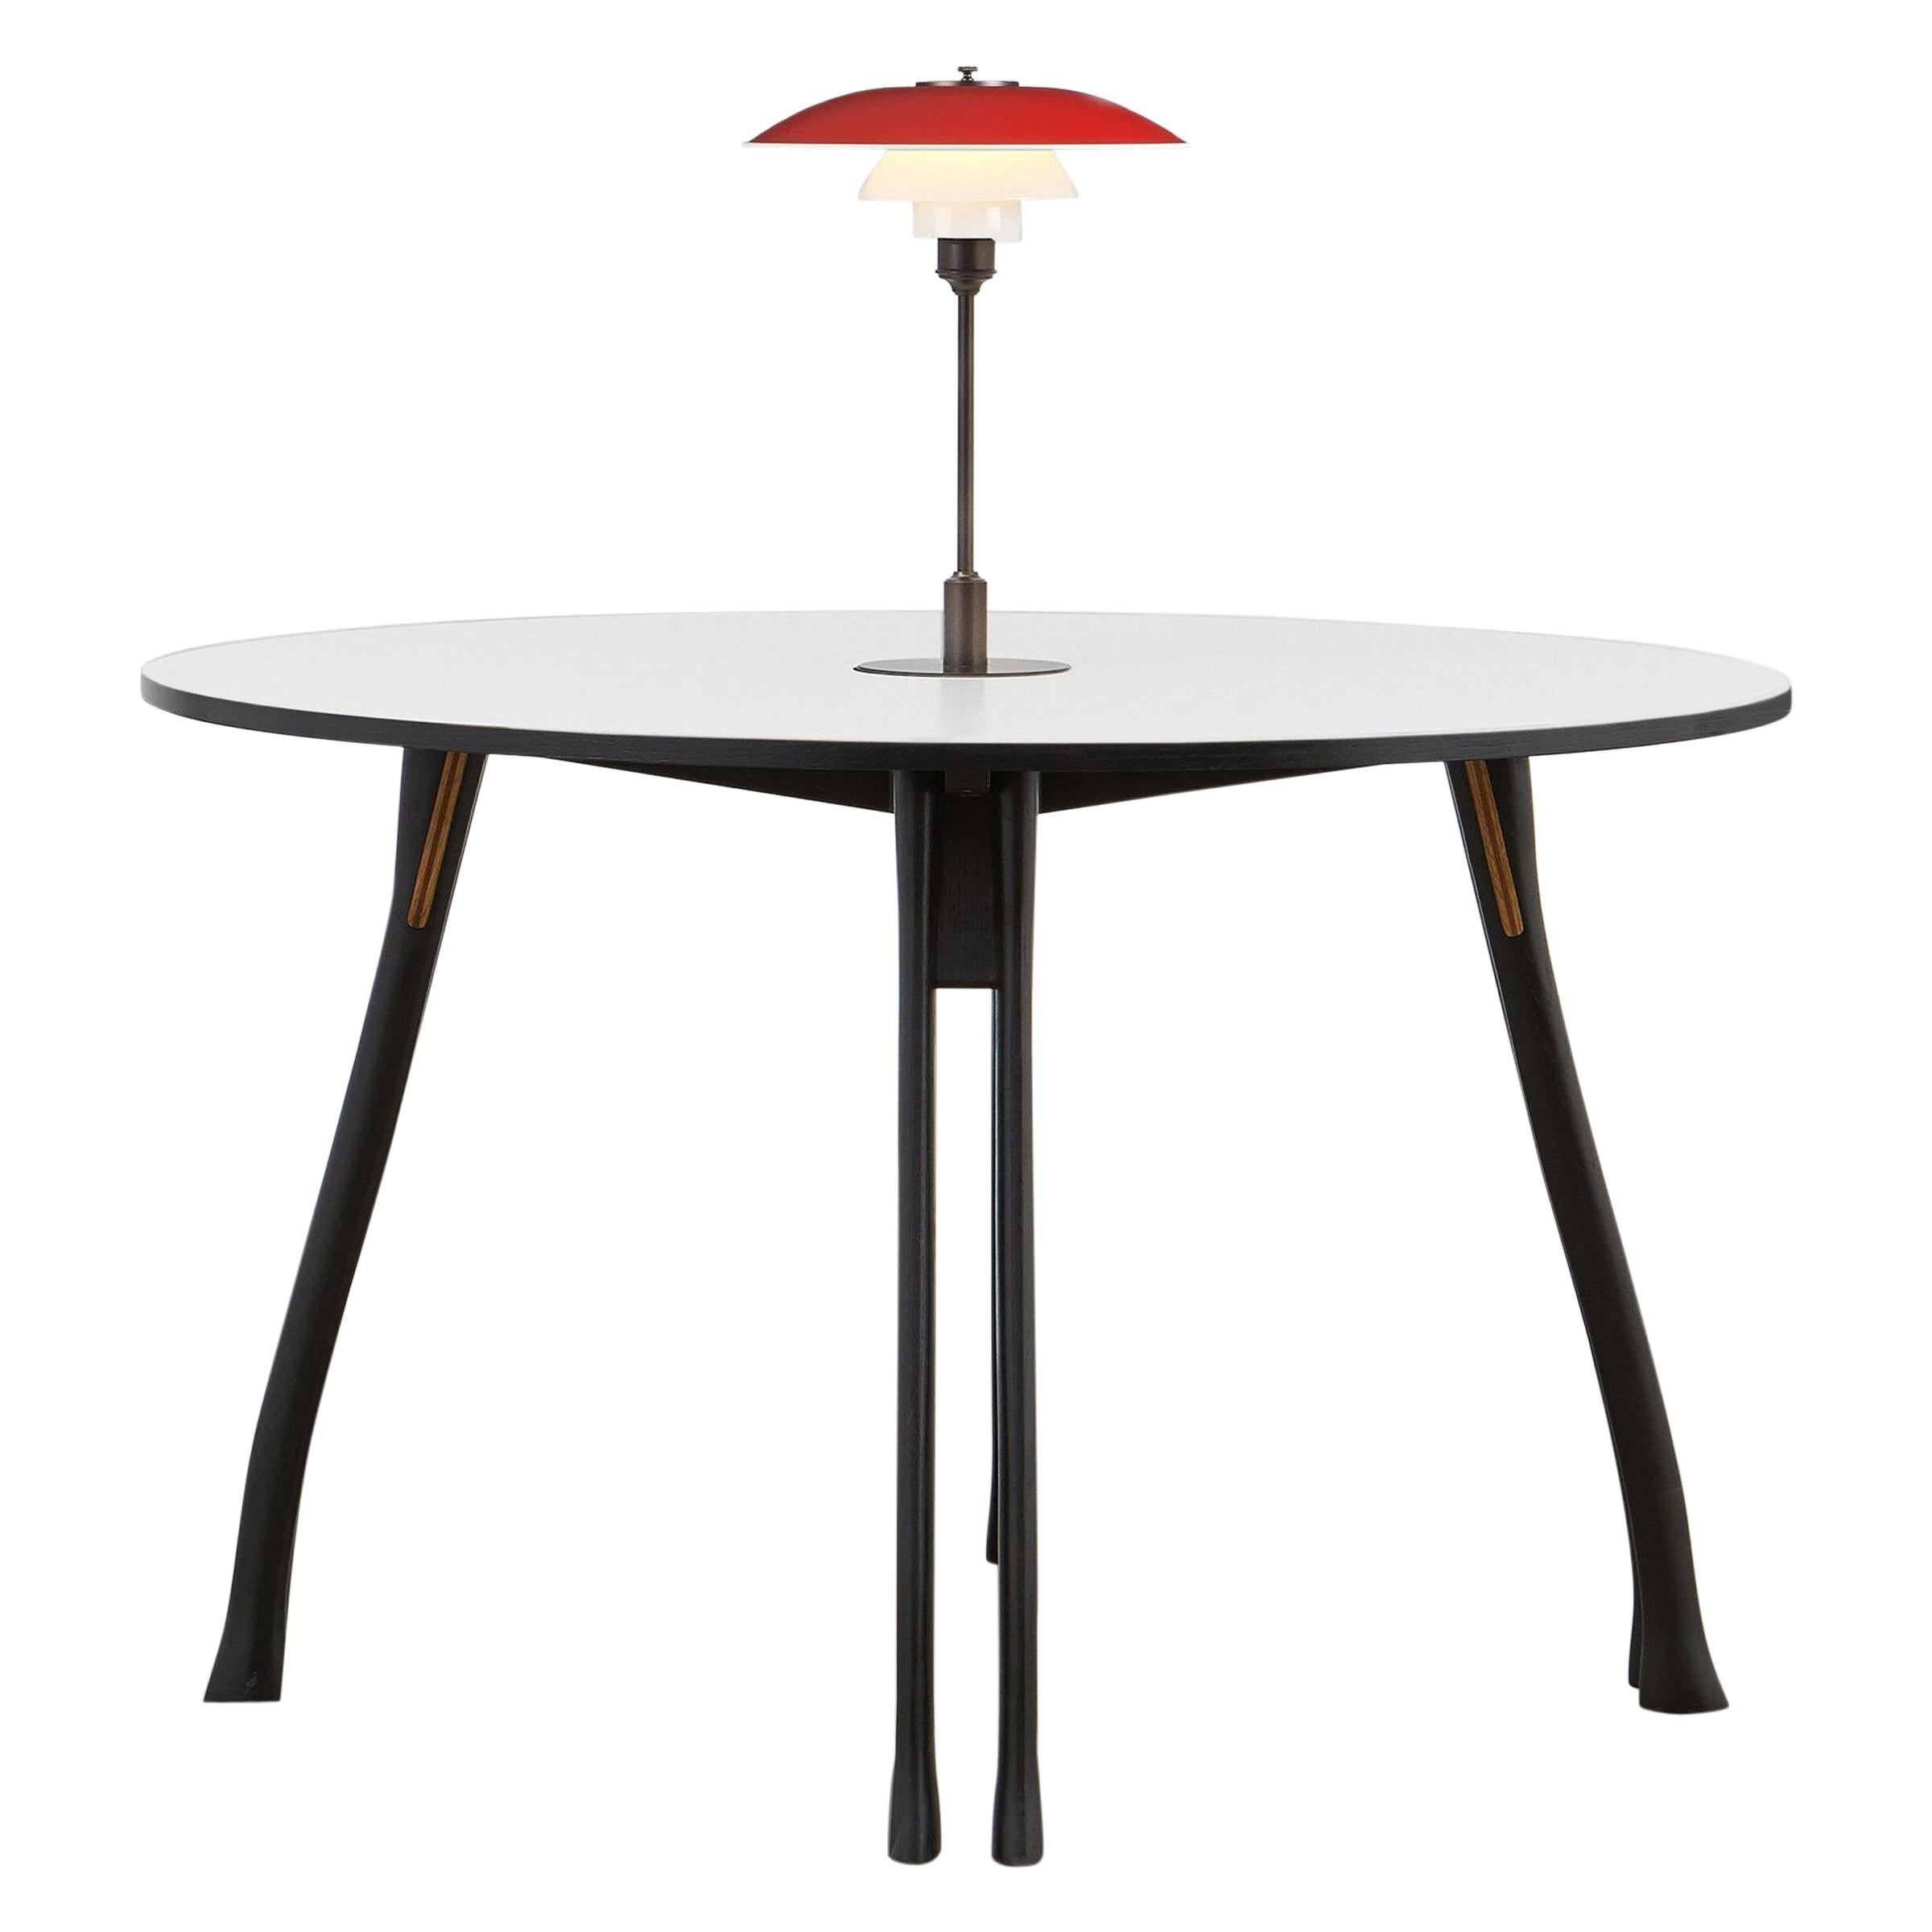 PH Axe Table, Black Oak Legs, Laminated Plate, Red PH 3 ½-2 ½ Lamp